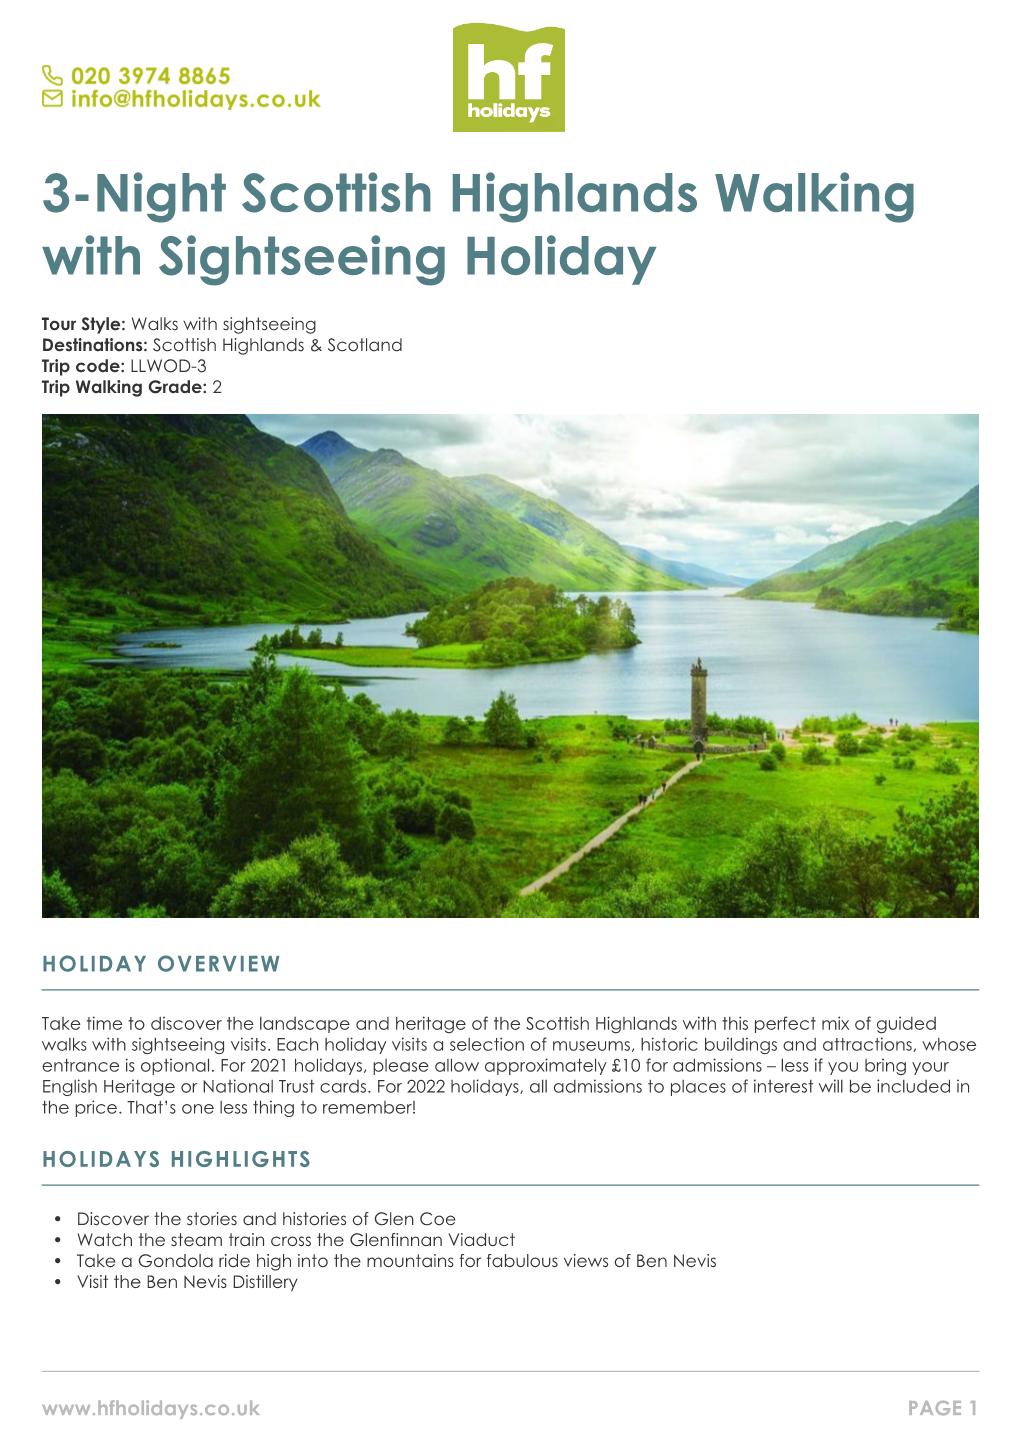 3-Night Scottish Highlands Walking with Sightseeing Holiday